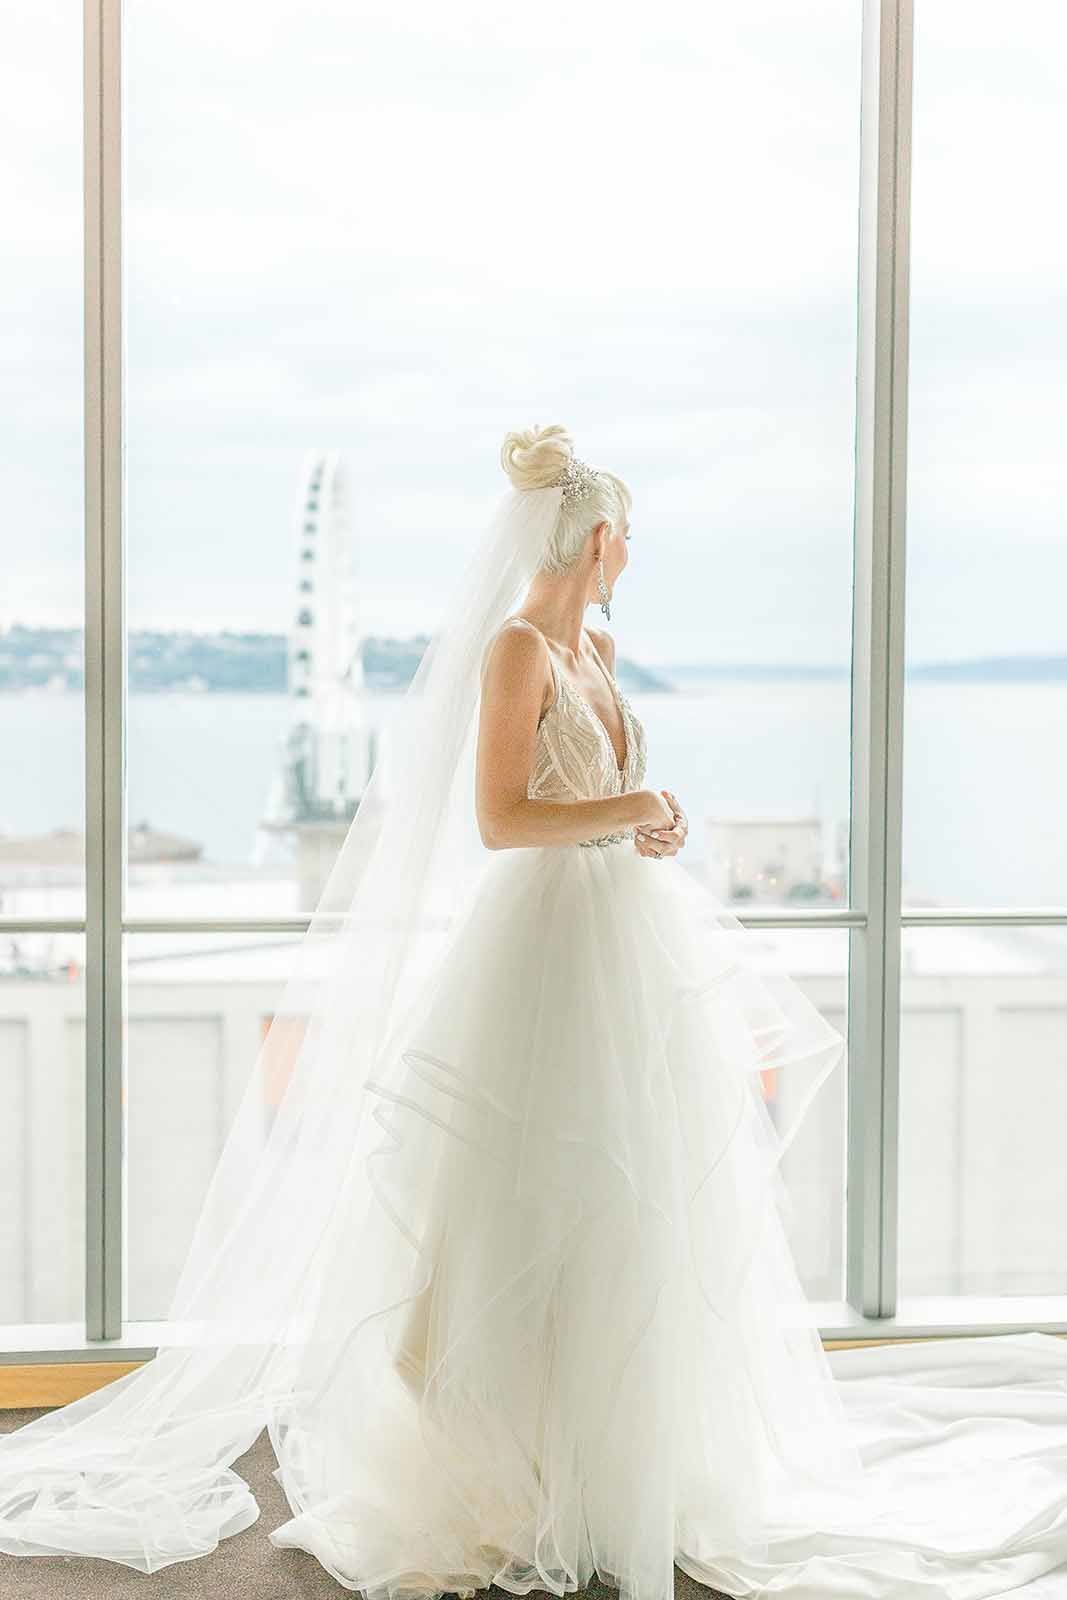 Four seasons Seattle bride in front of window with ferris wheel in background